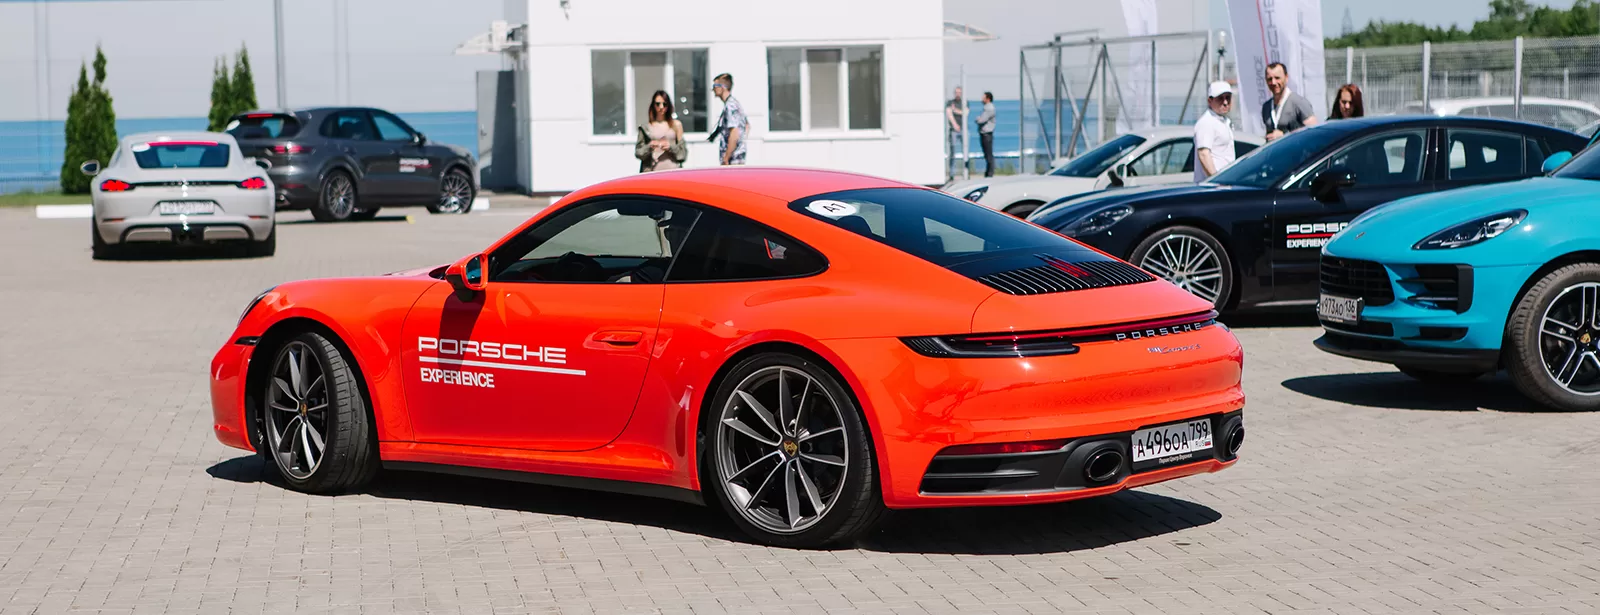 Porsche Driving Experience Day 2019